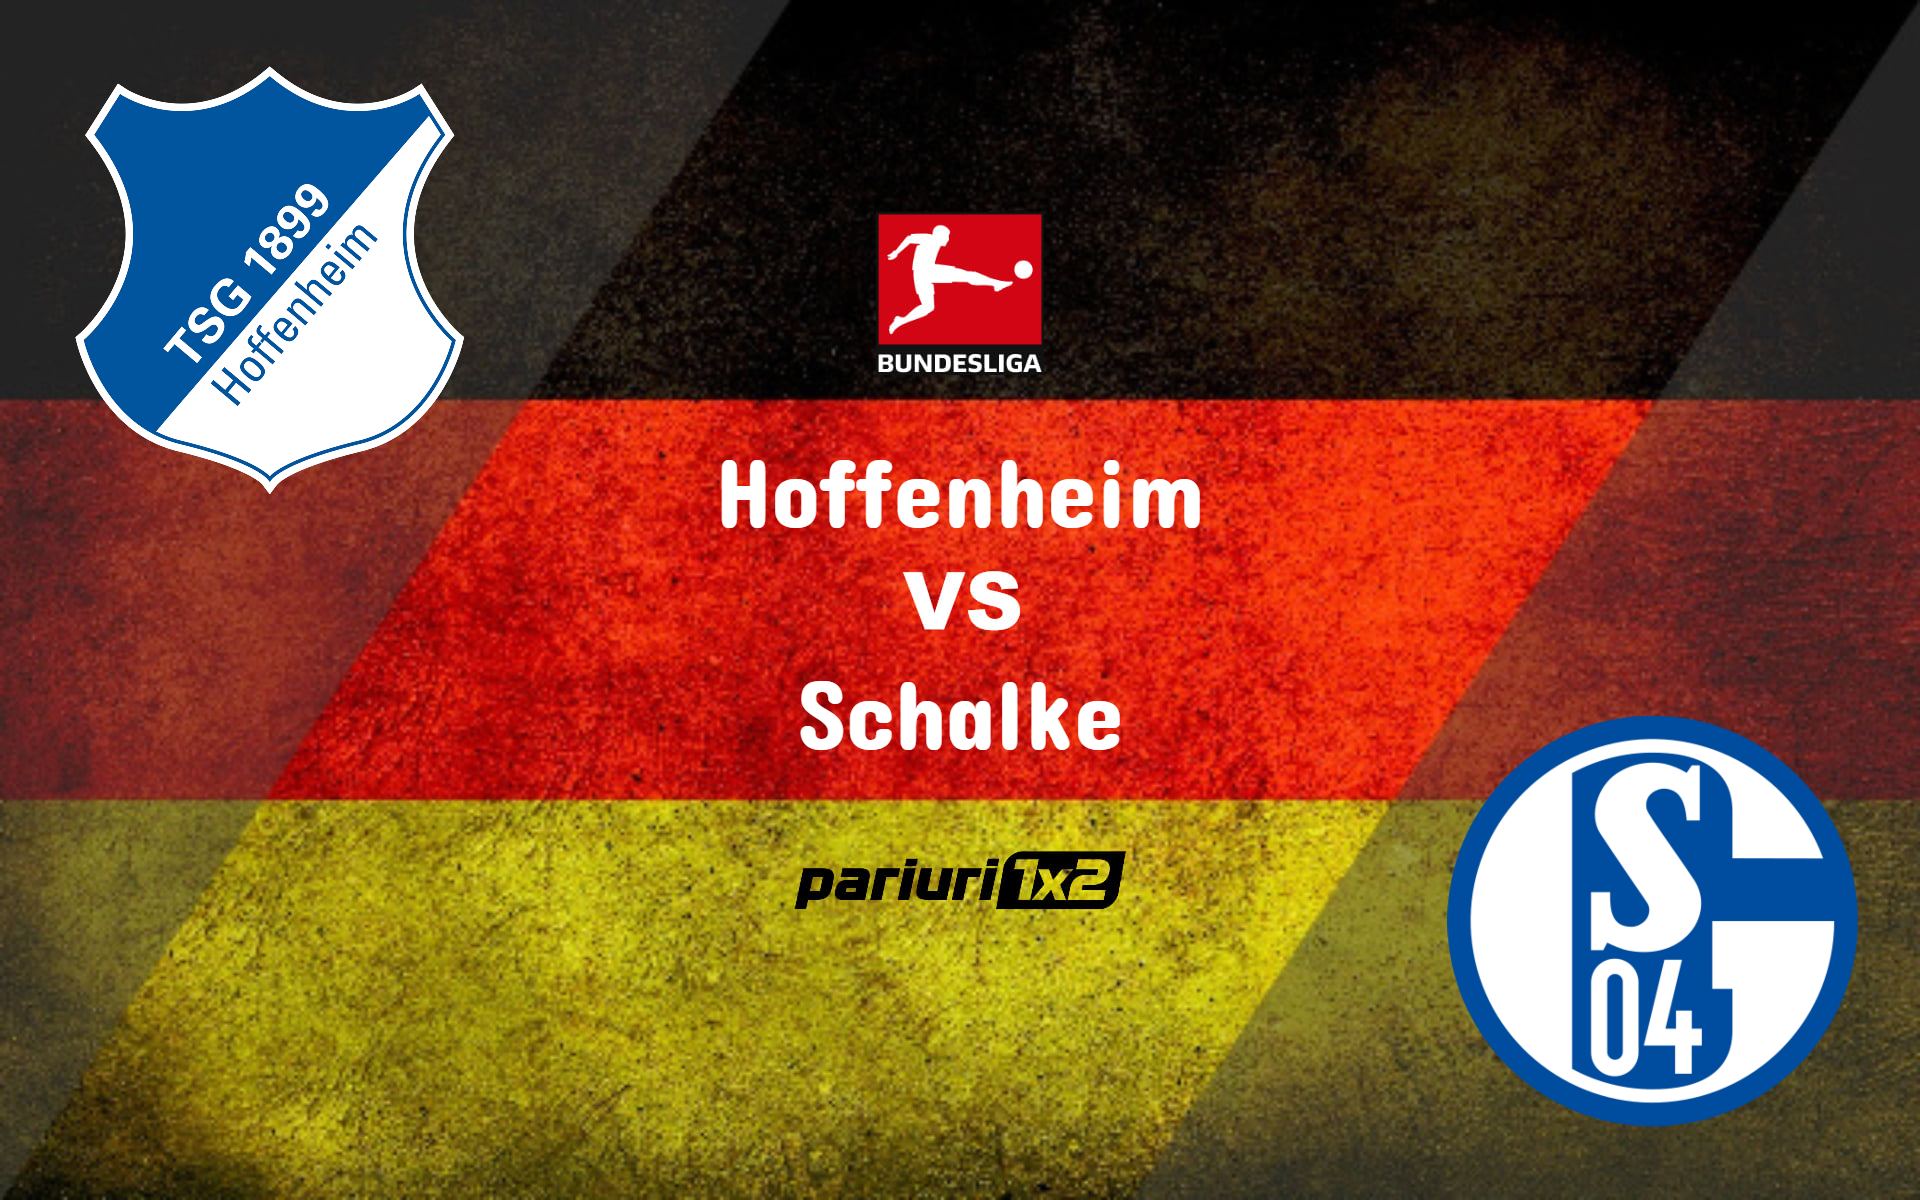 Ponturi bune » Hoffenheim – Schalke: TSG vrea revansa cu „minerii” deja retrogradati!